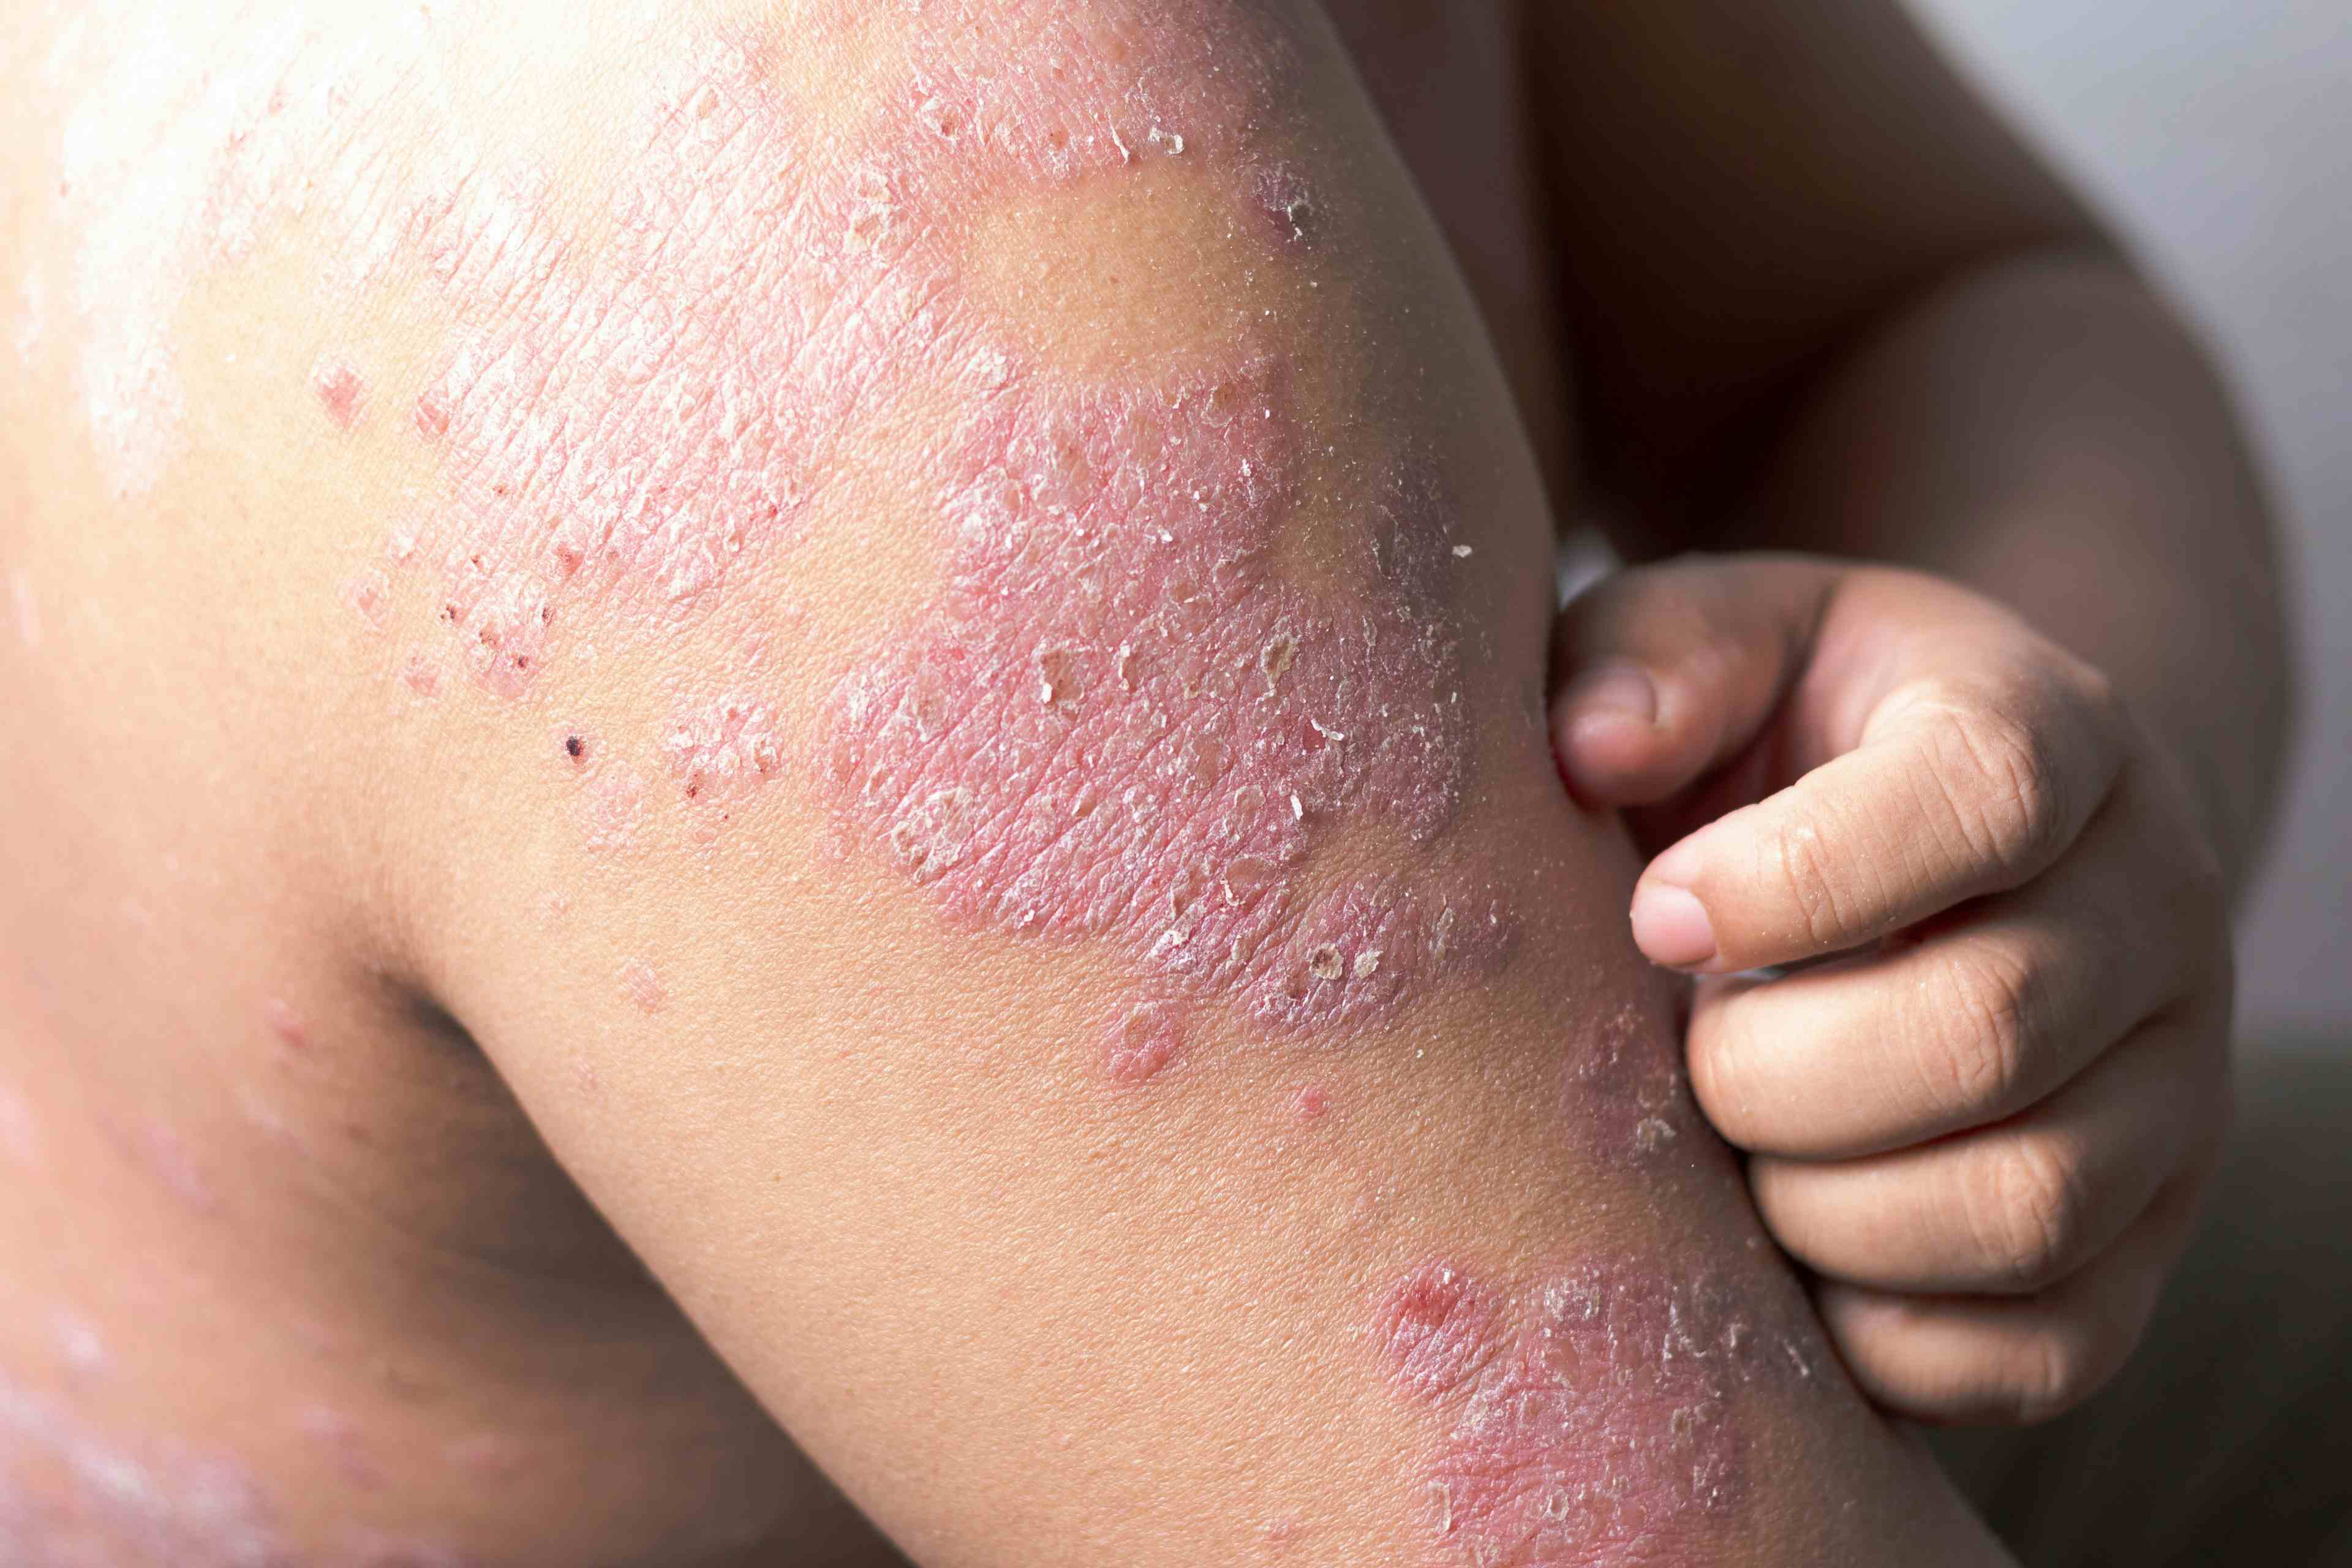 Patient suffering from atopic dermatitis -- Image credit: Nikkikii | stock.adobe.com